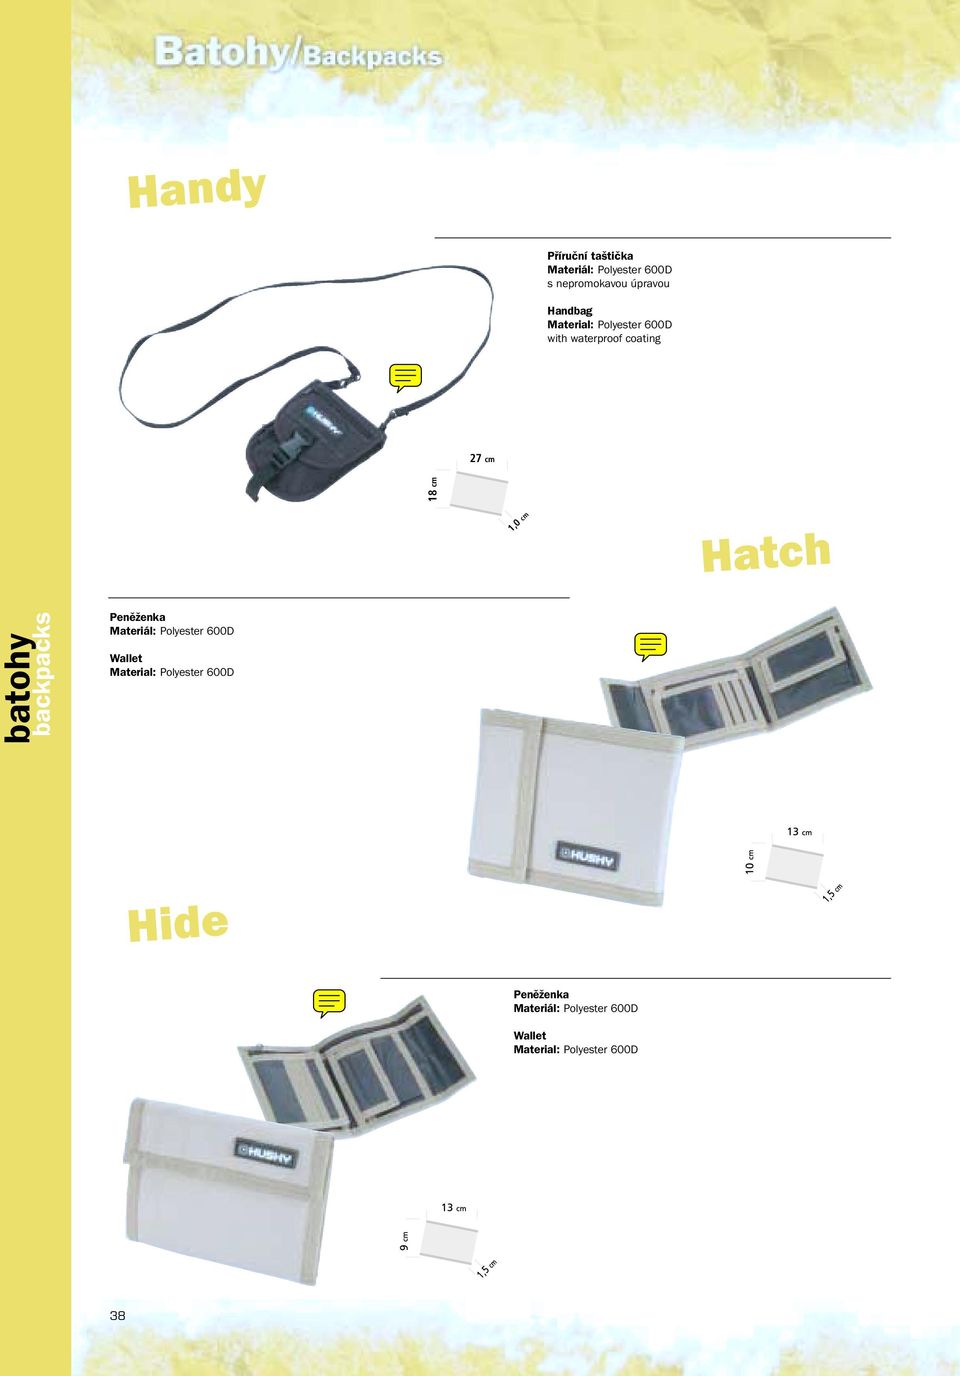 cm Hatch Peněženka Materiál: Polyester 600D Wallet Material: Polyester